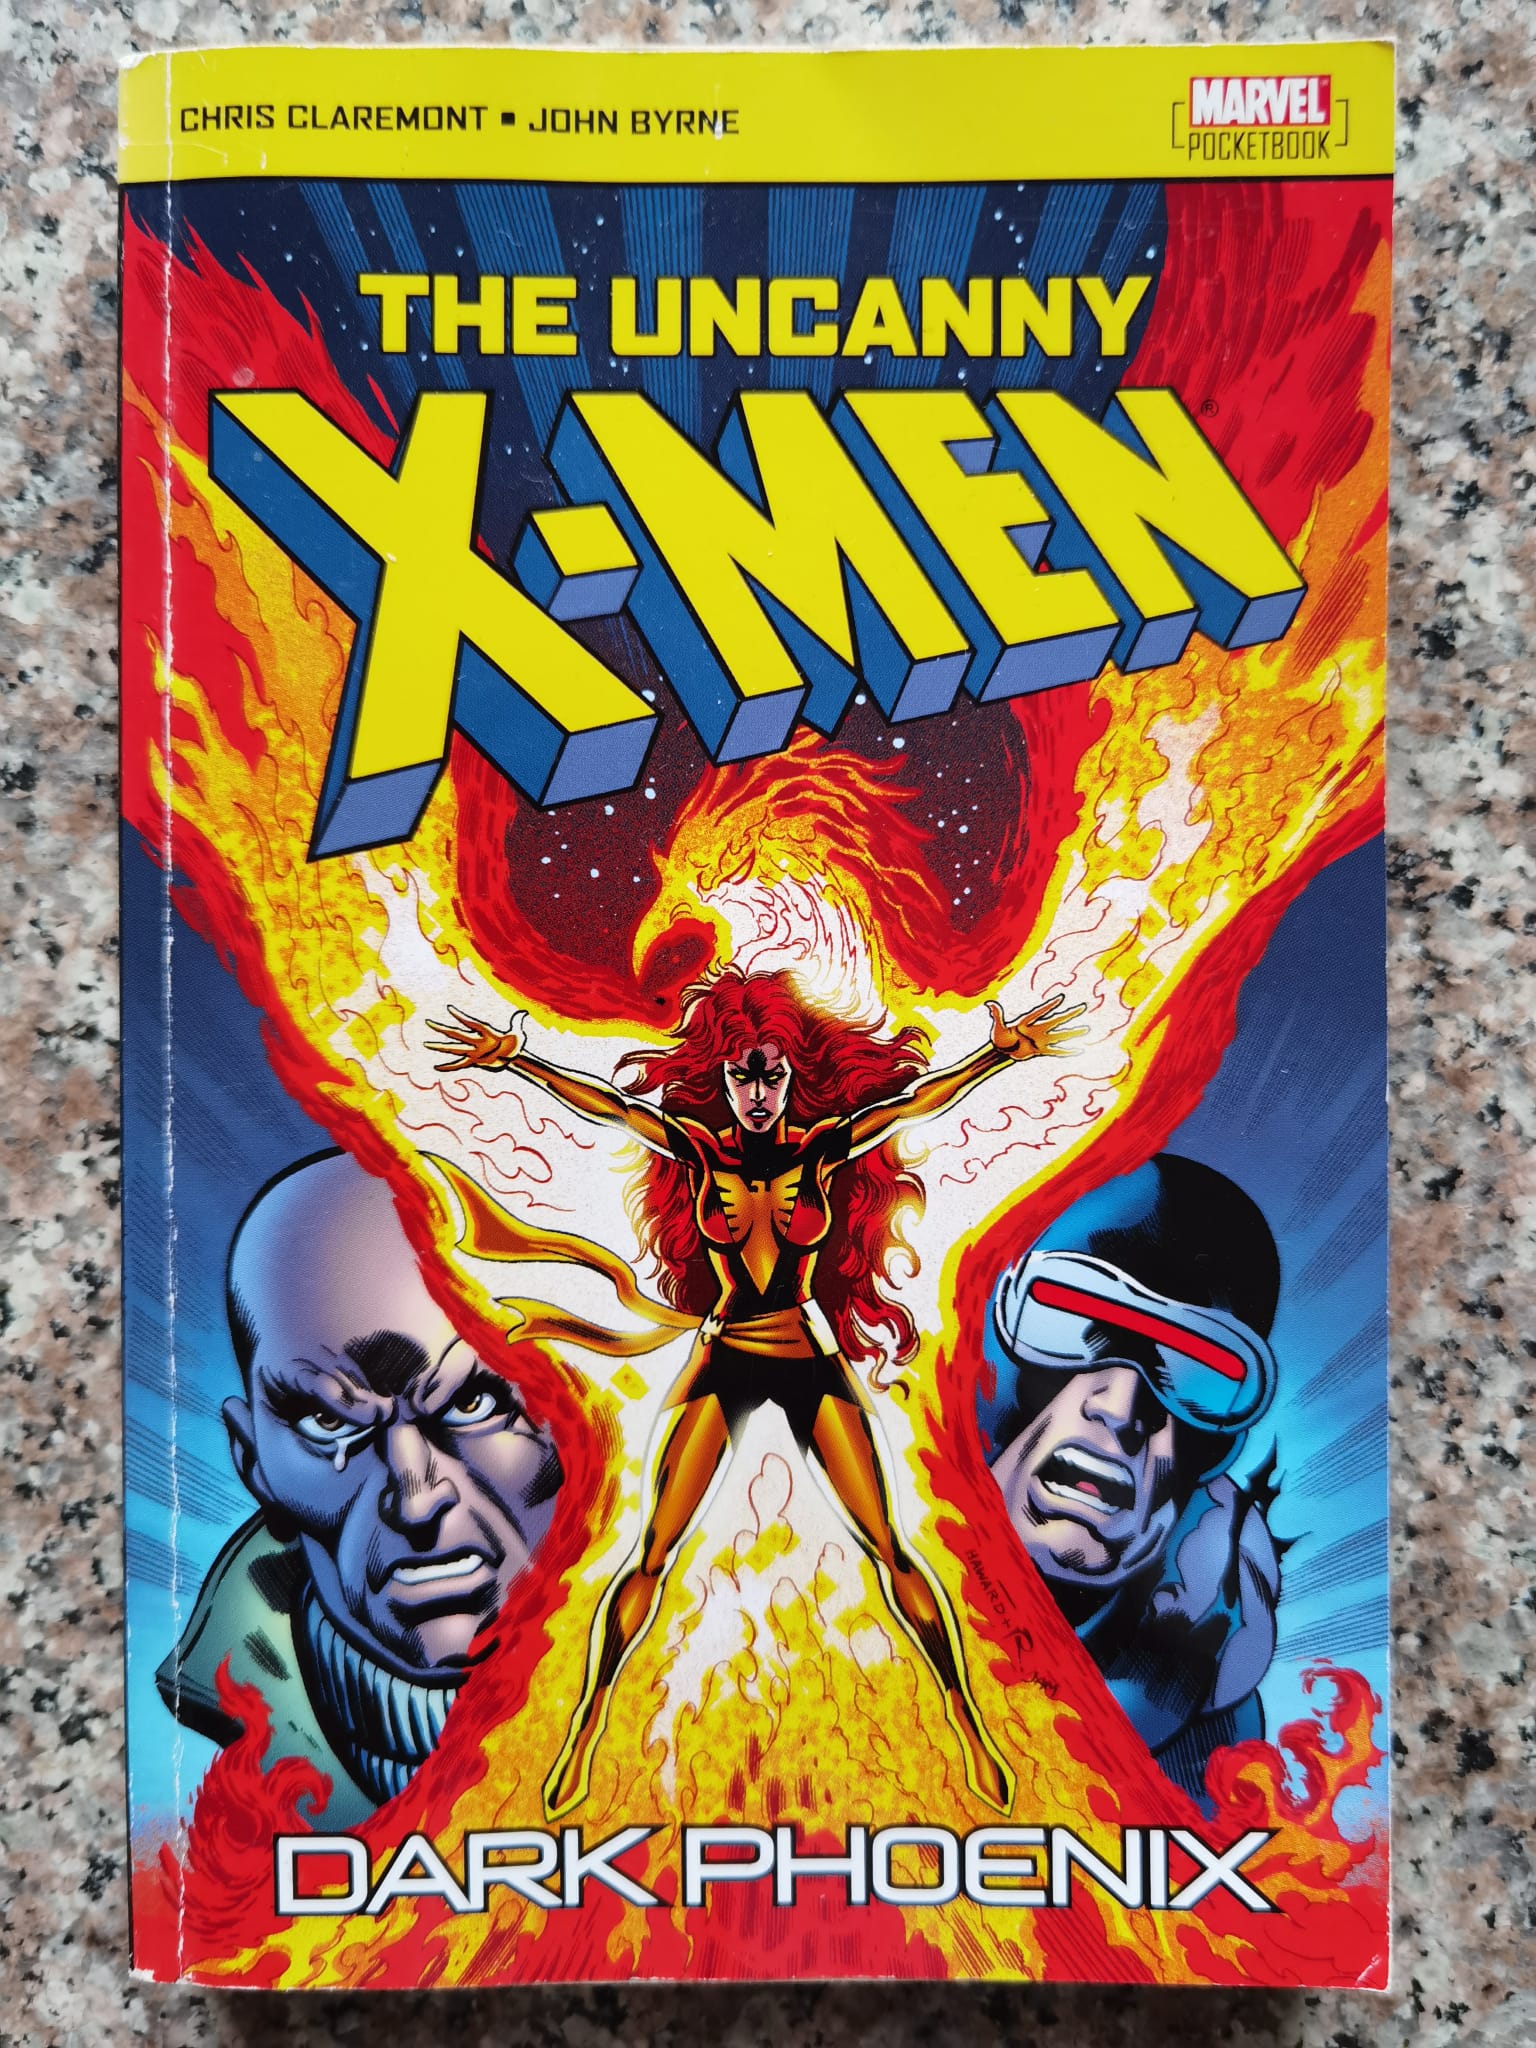 the uncanny x-men: dark phoenix                                                                      chris claremont, john byrne                                                                         